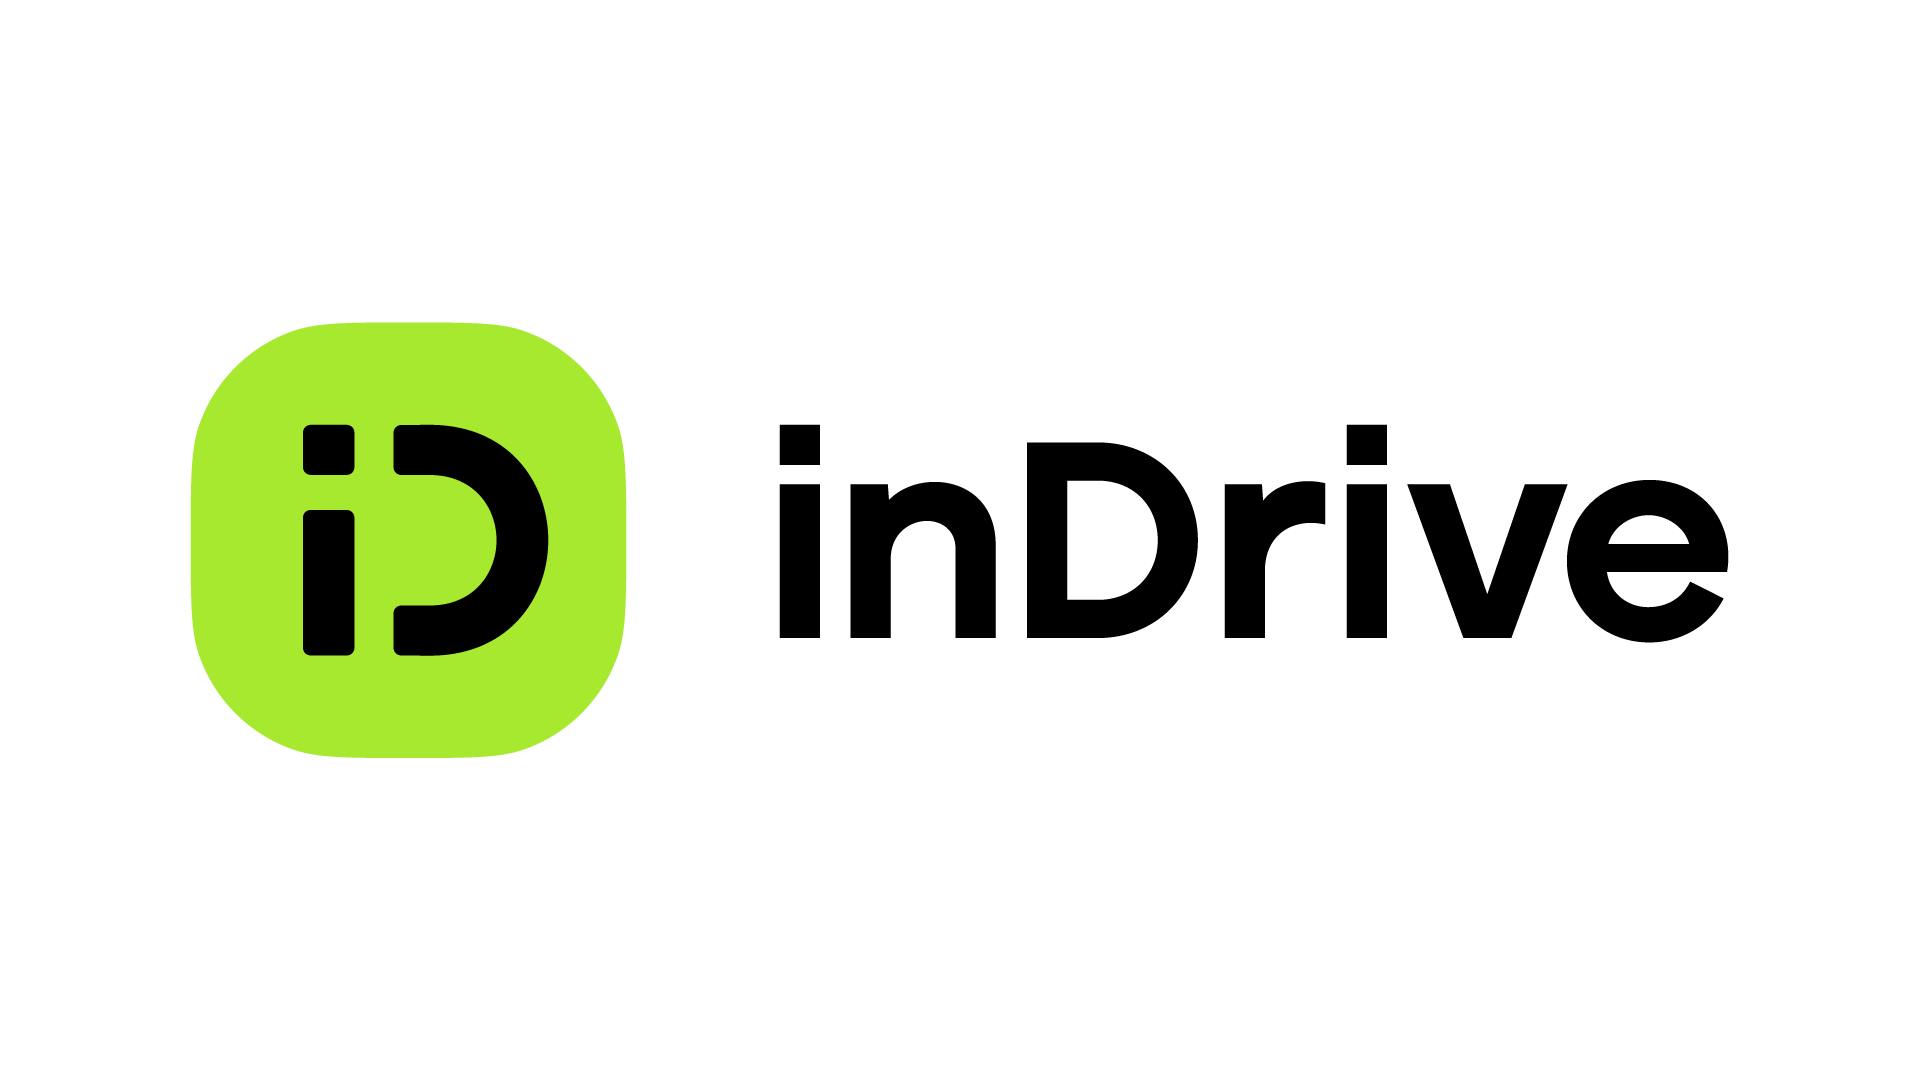 inDrive logo